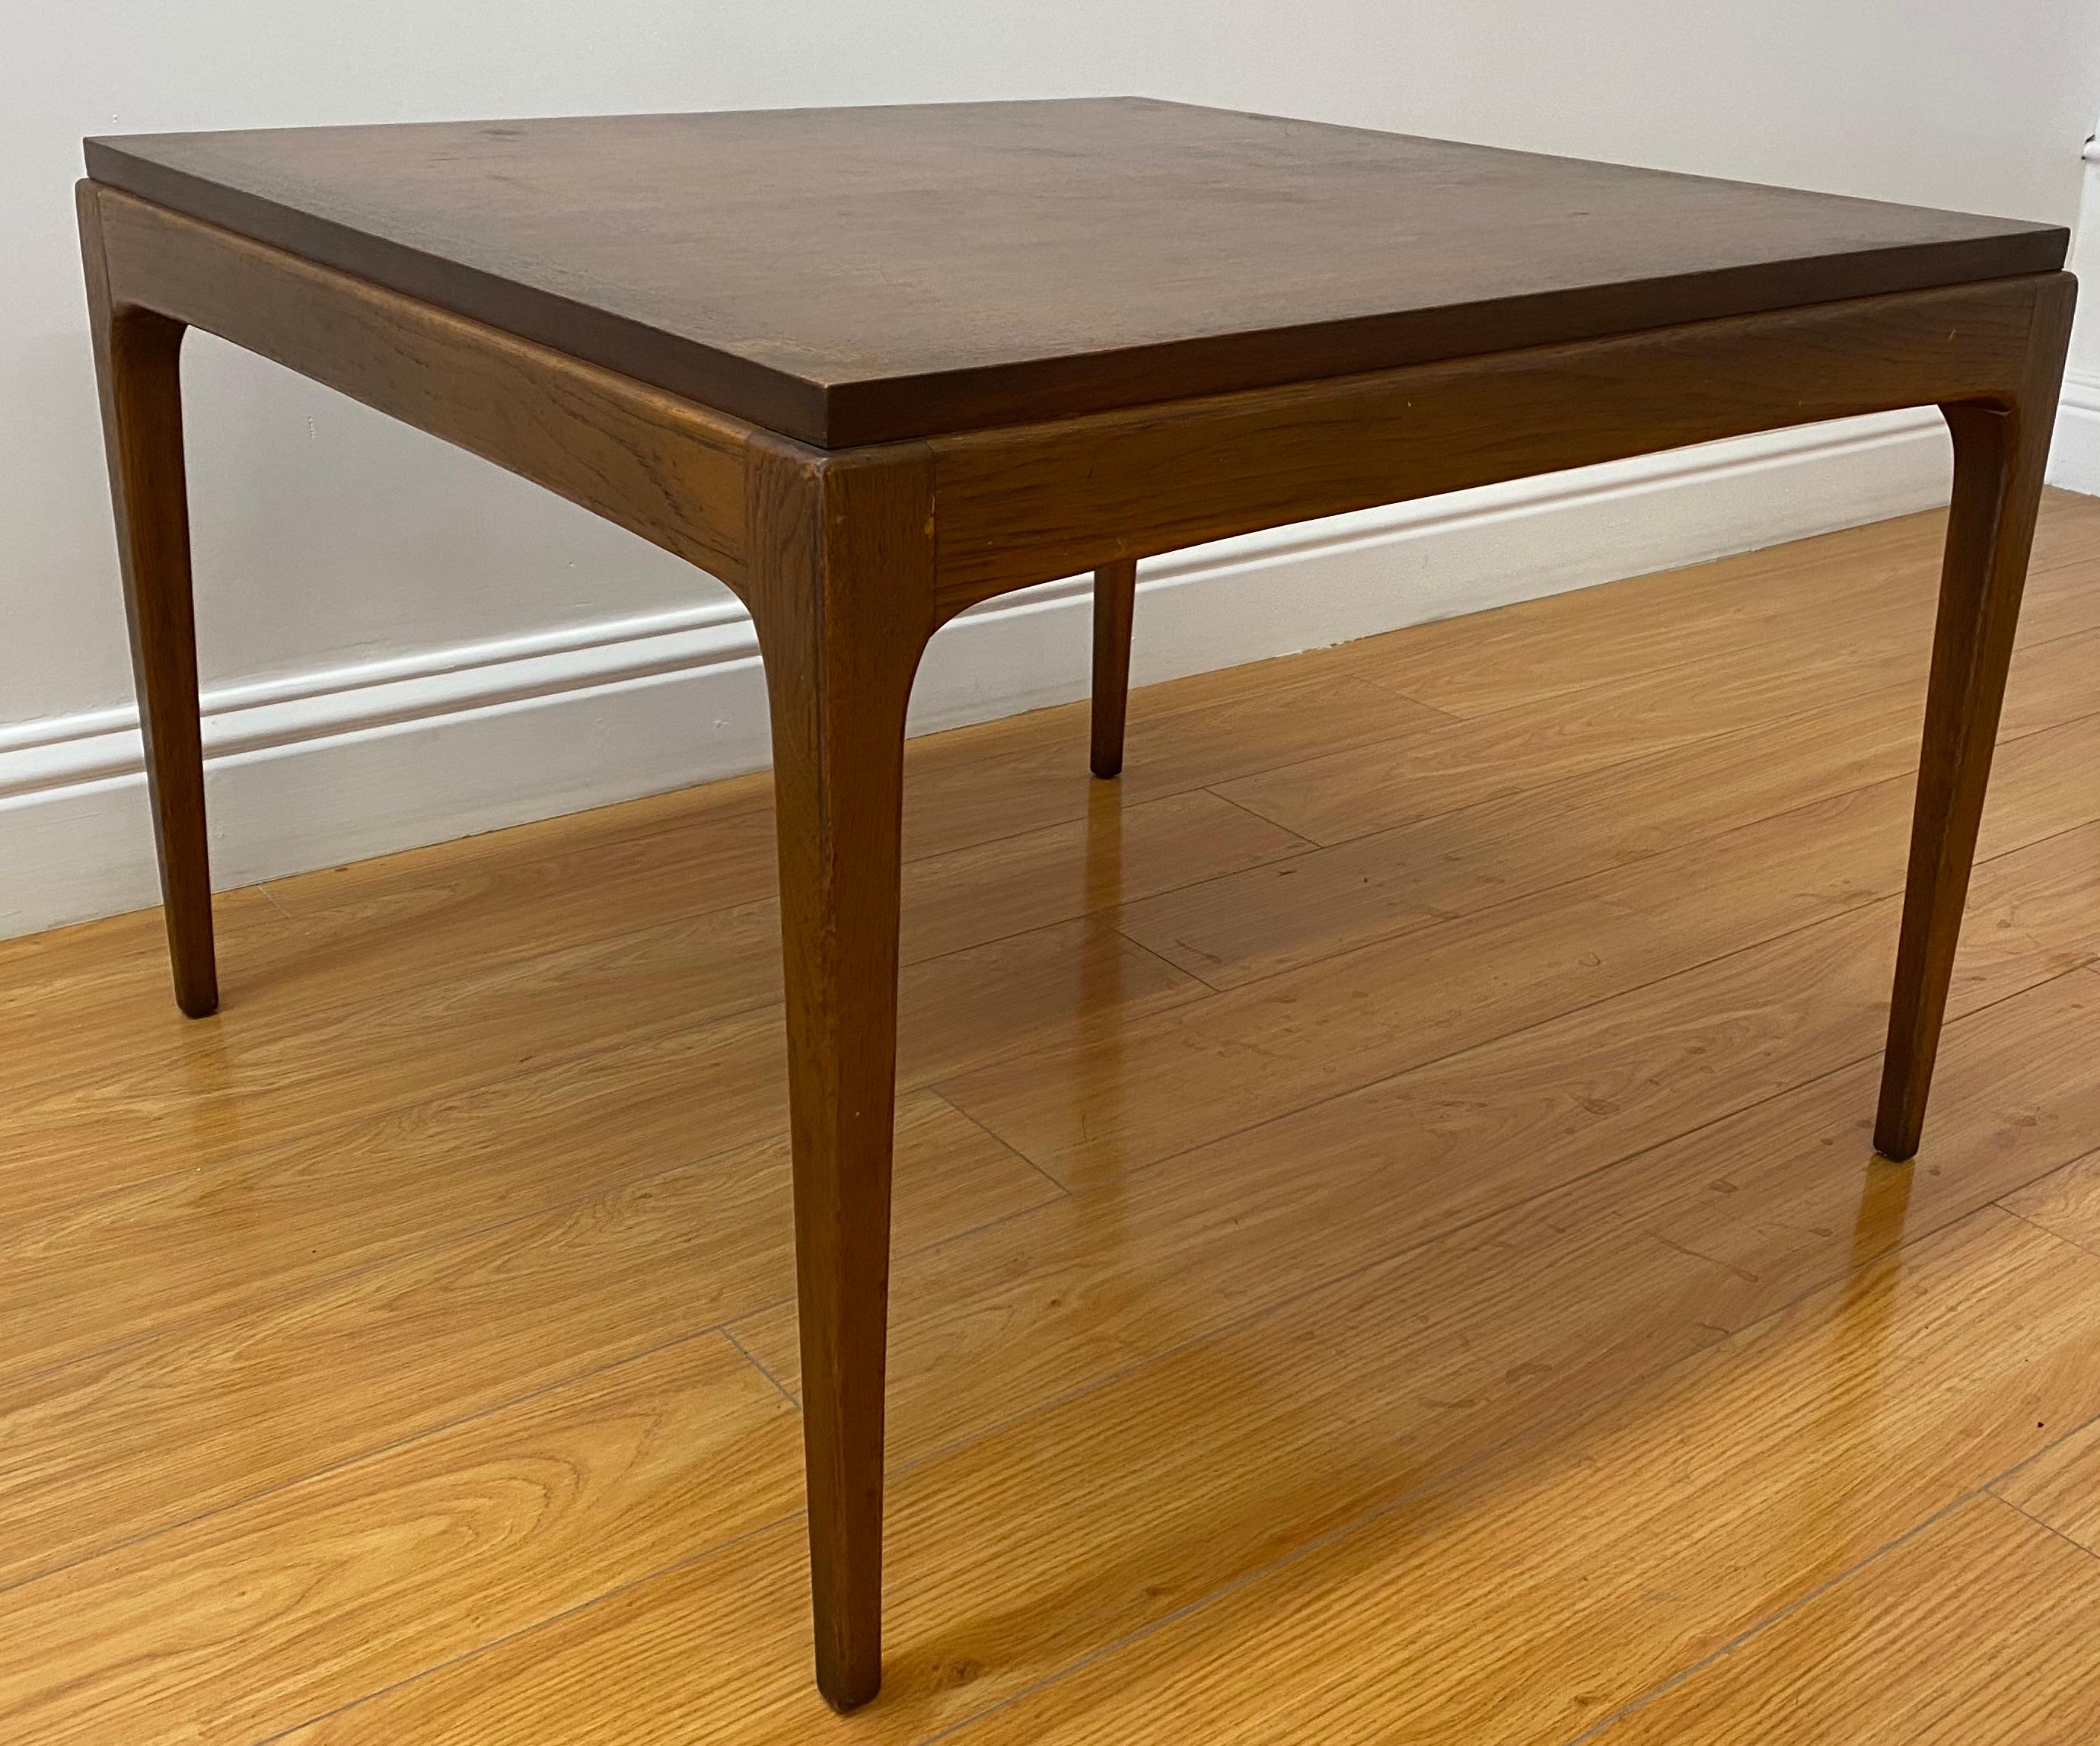 Mid century walnut coffee table by Lane, Altavista, Virginia

Measures: 28.5